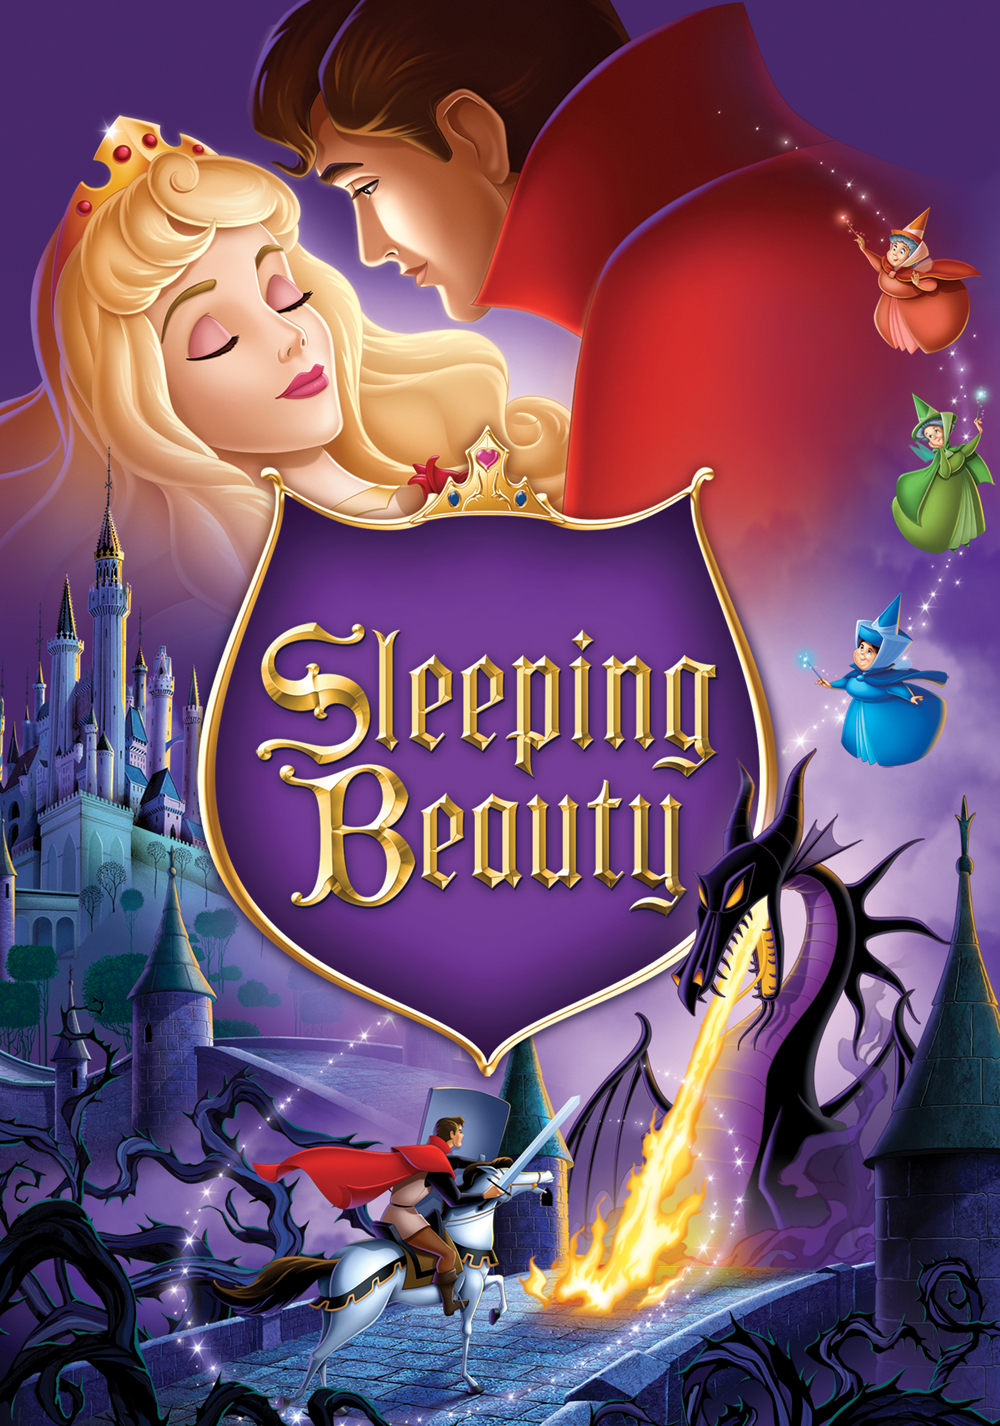 Watch Sleeping Beauty Full Movie Disney Disney Sleeping Beauty Disney Disney Pictures